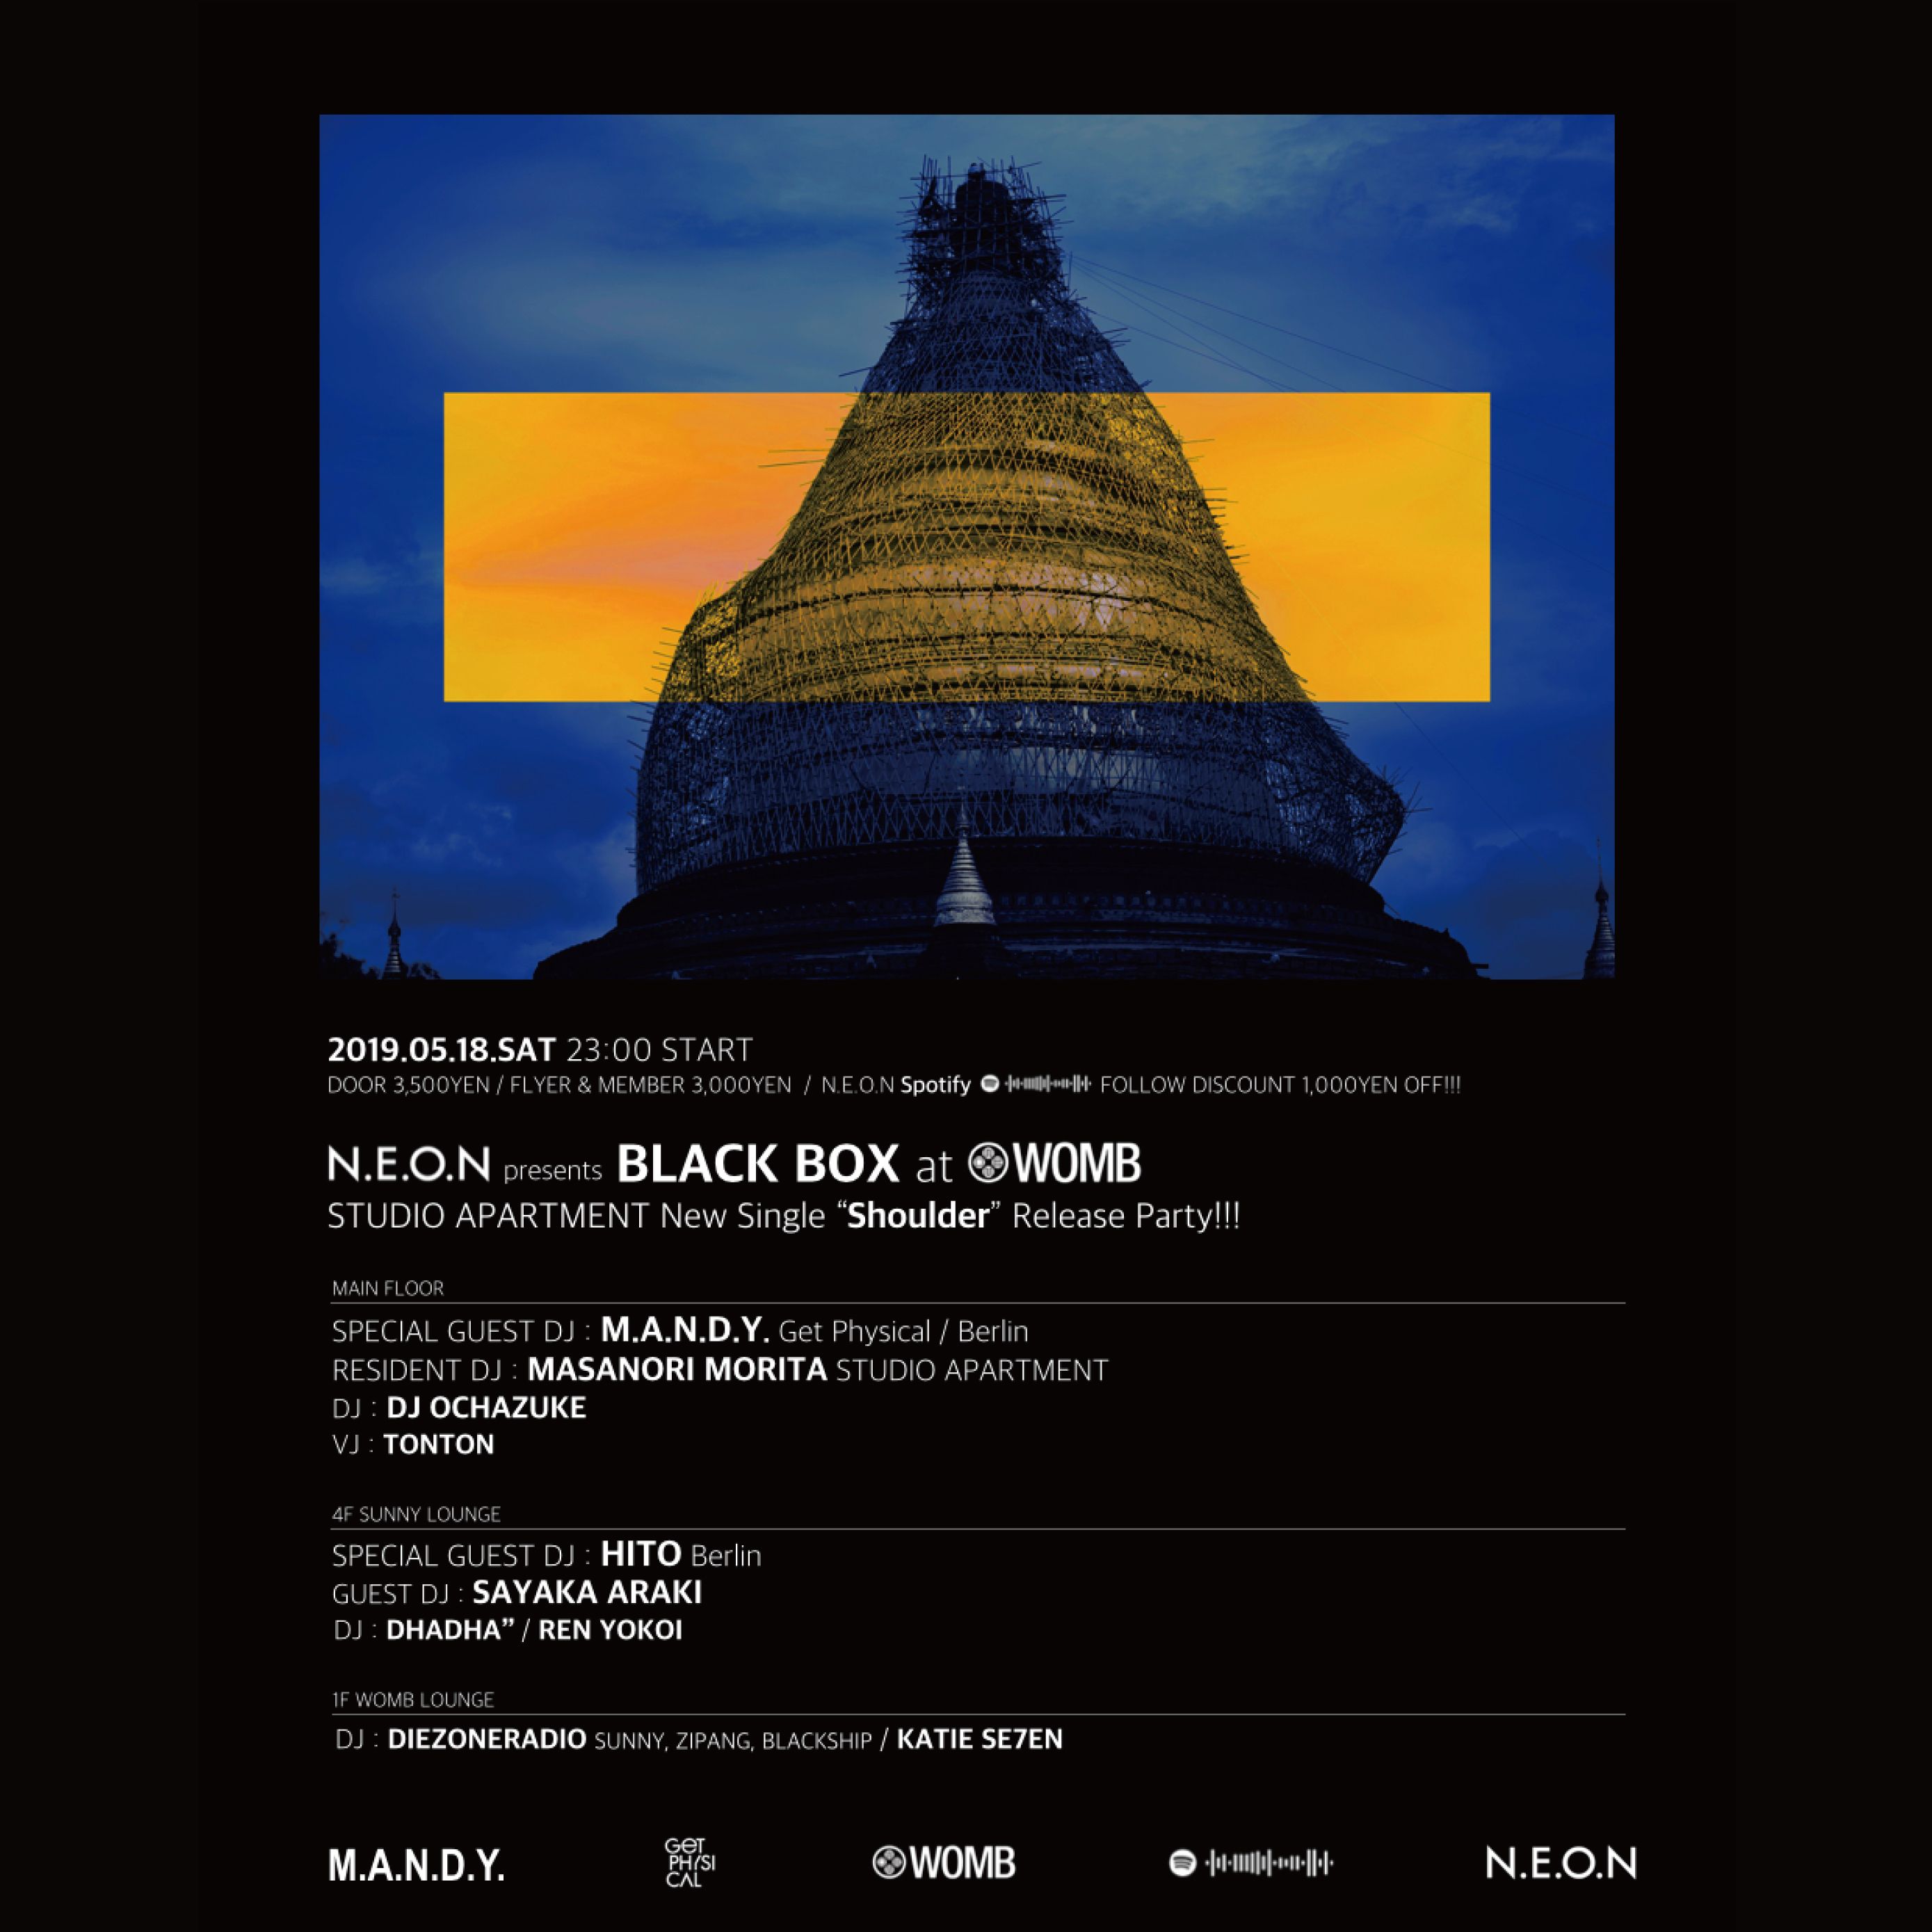 N.E.O.N presents BLACK BOX at WOMB STUDIO APARTMENT “SHOULDER” Release Party!!!